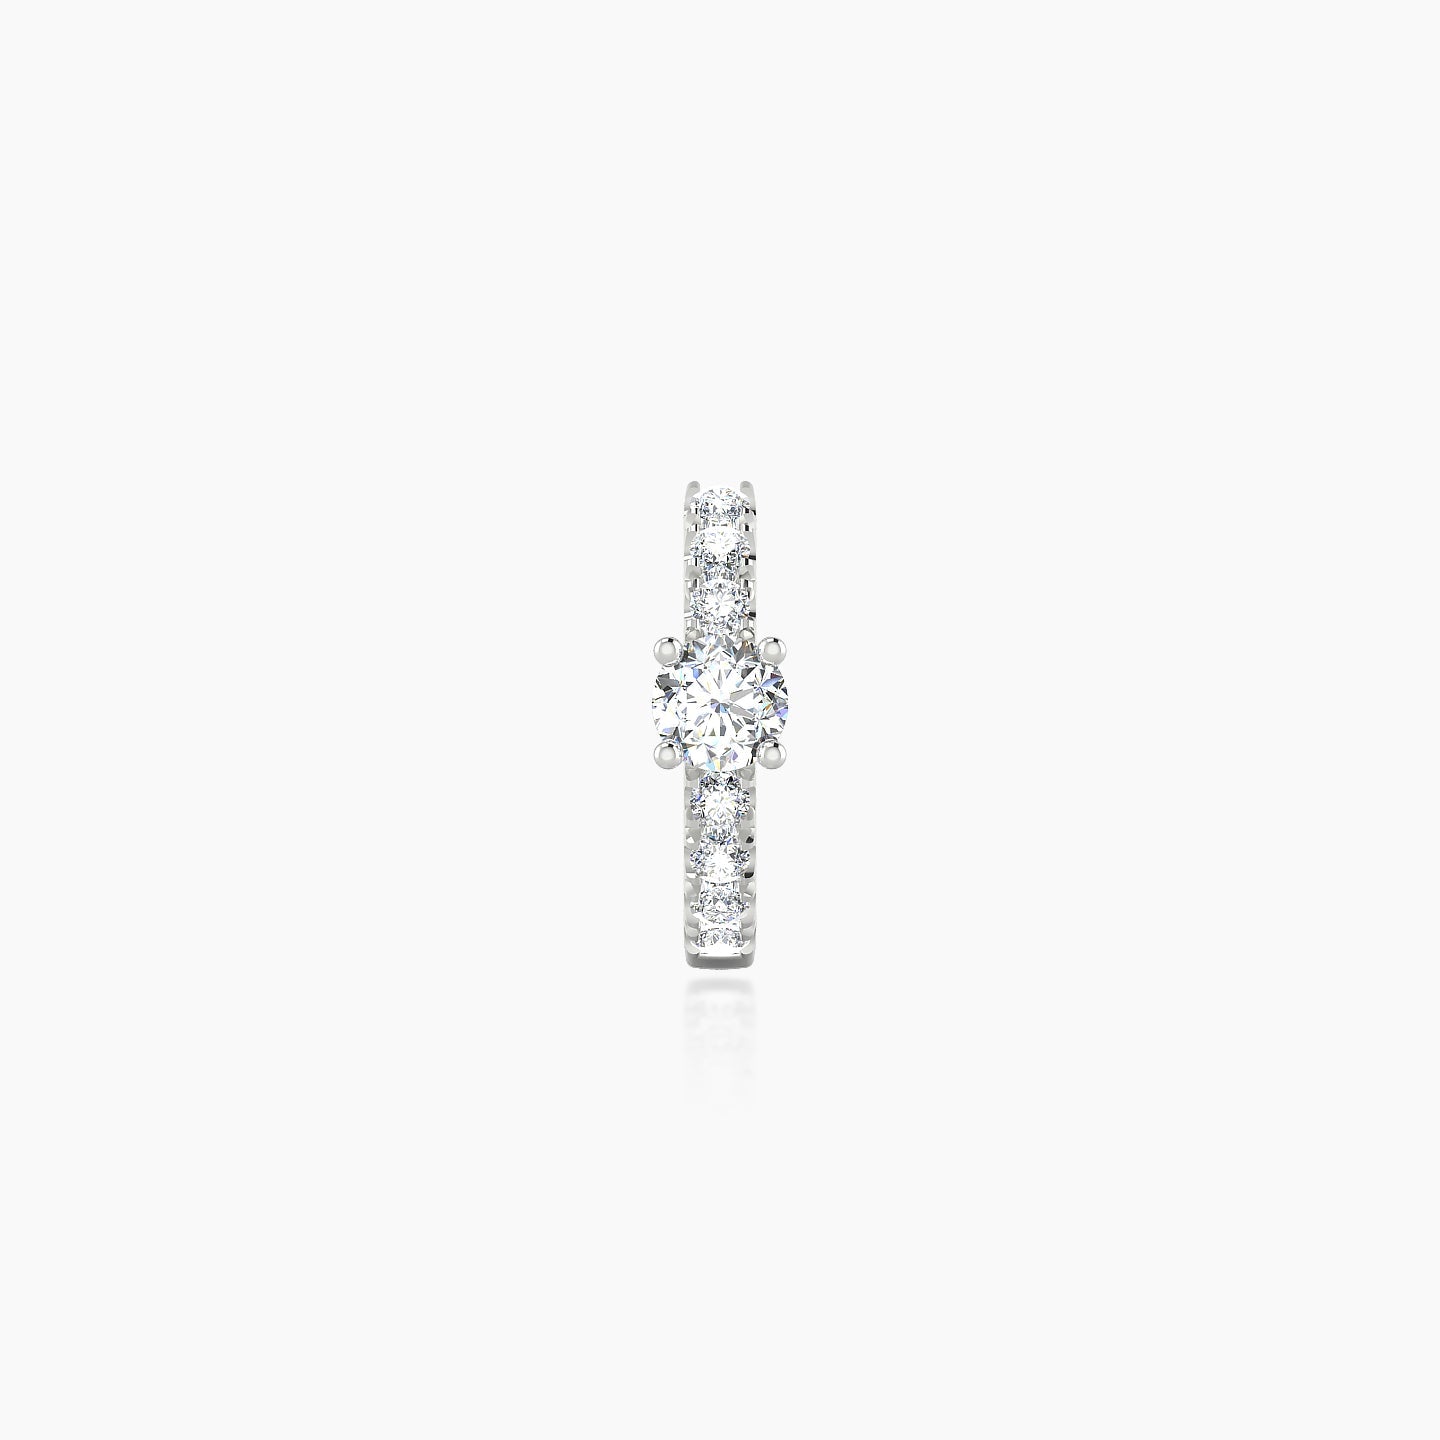 Inanna | 18k White Gold 6.5 mm Round Diamond Nose Ring Piercing